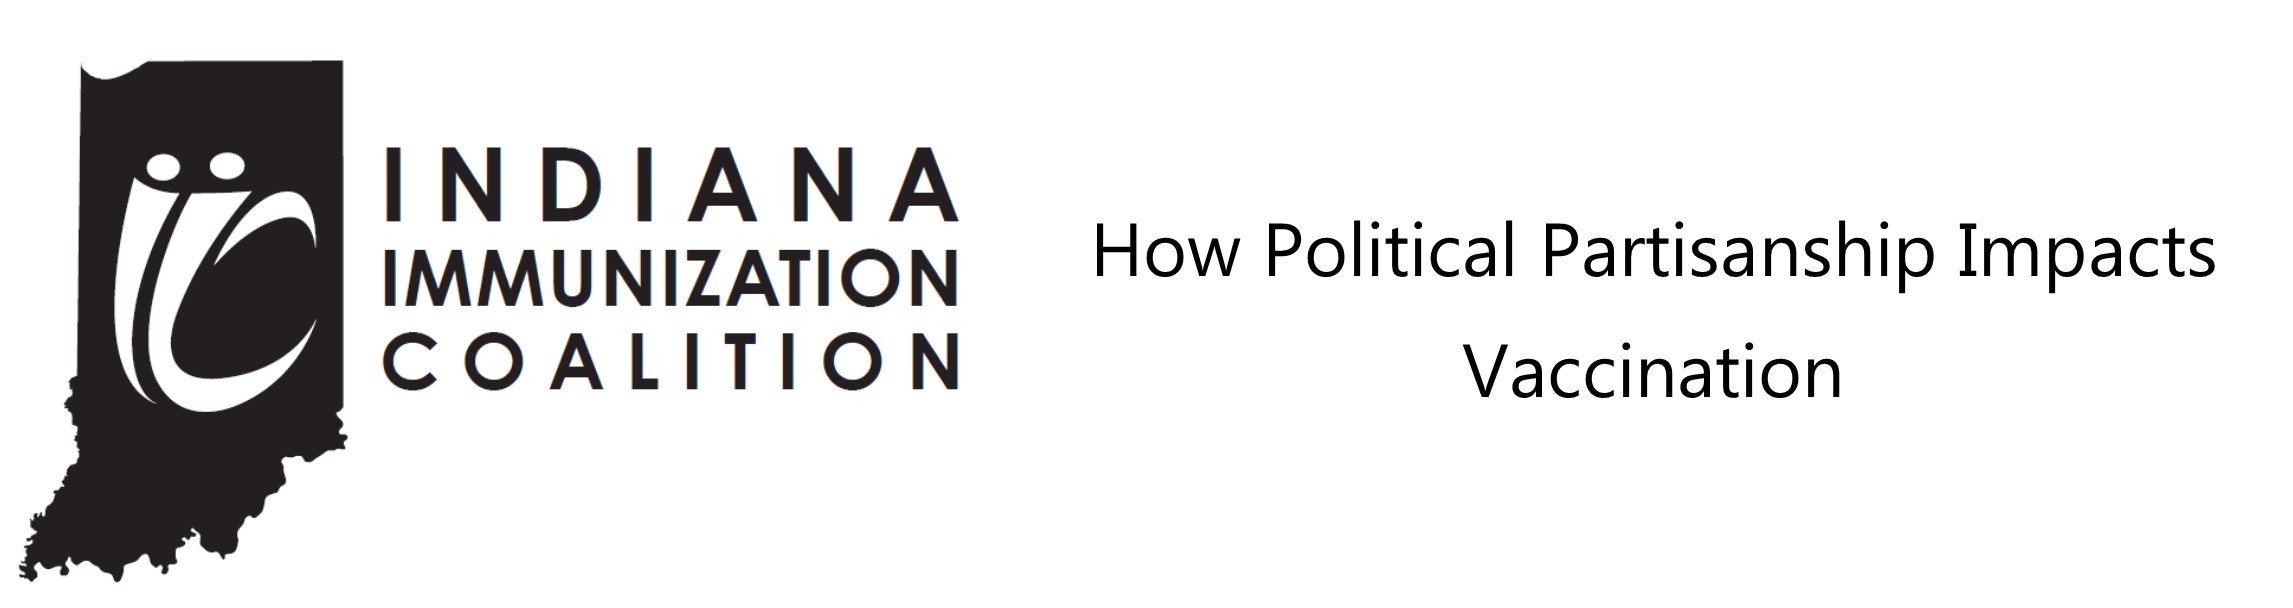 How Political Partisanship Impacts Vaccination Webinar Banner